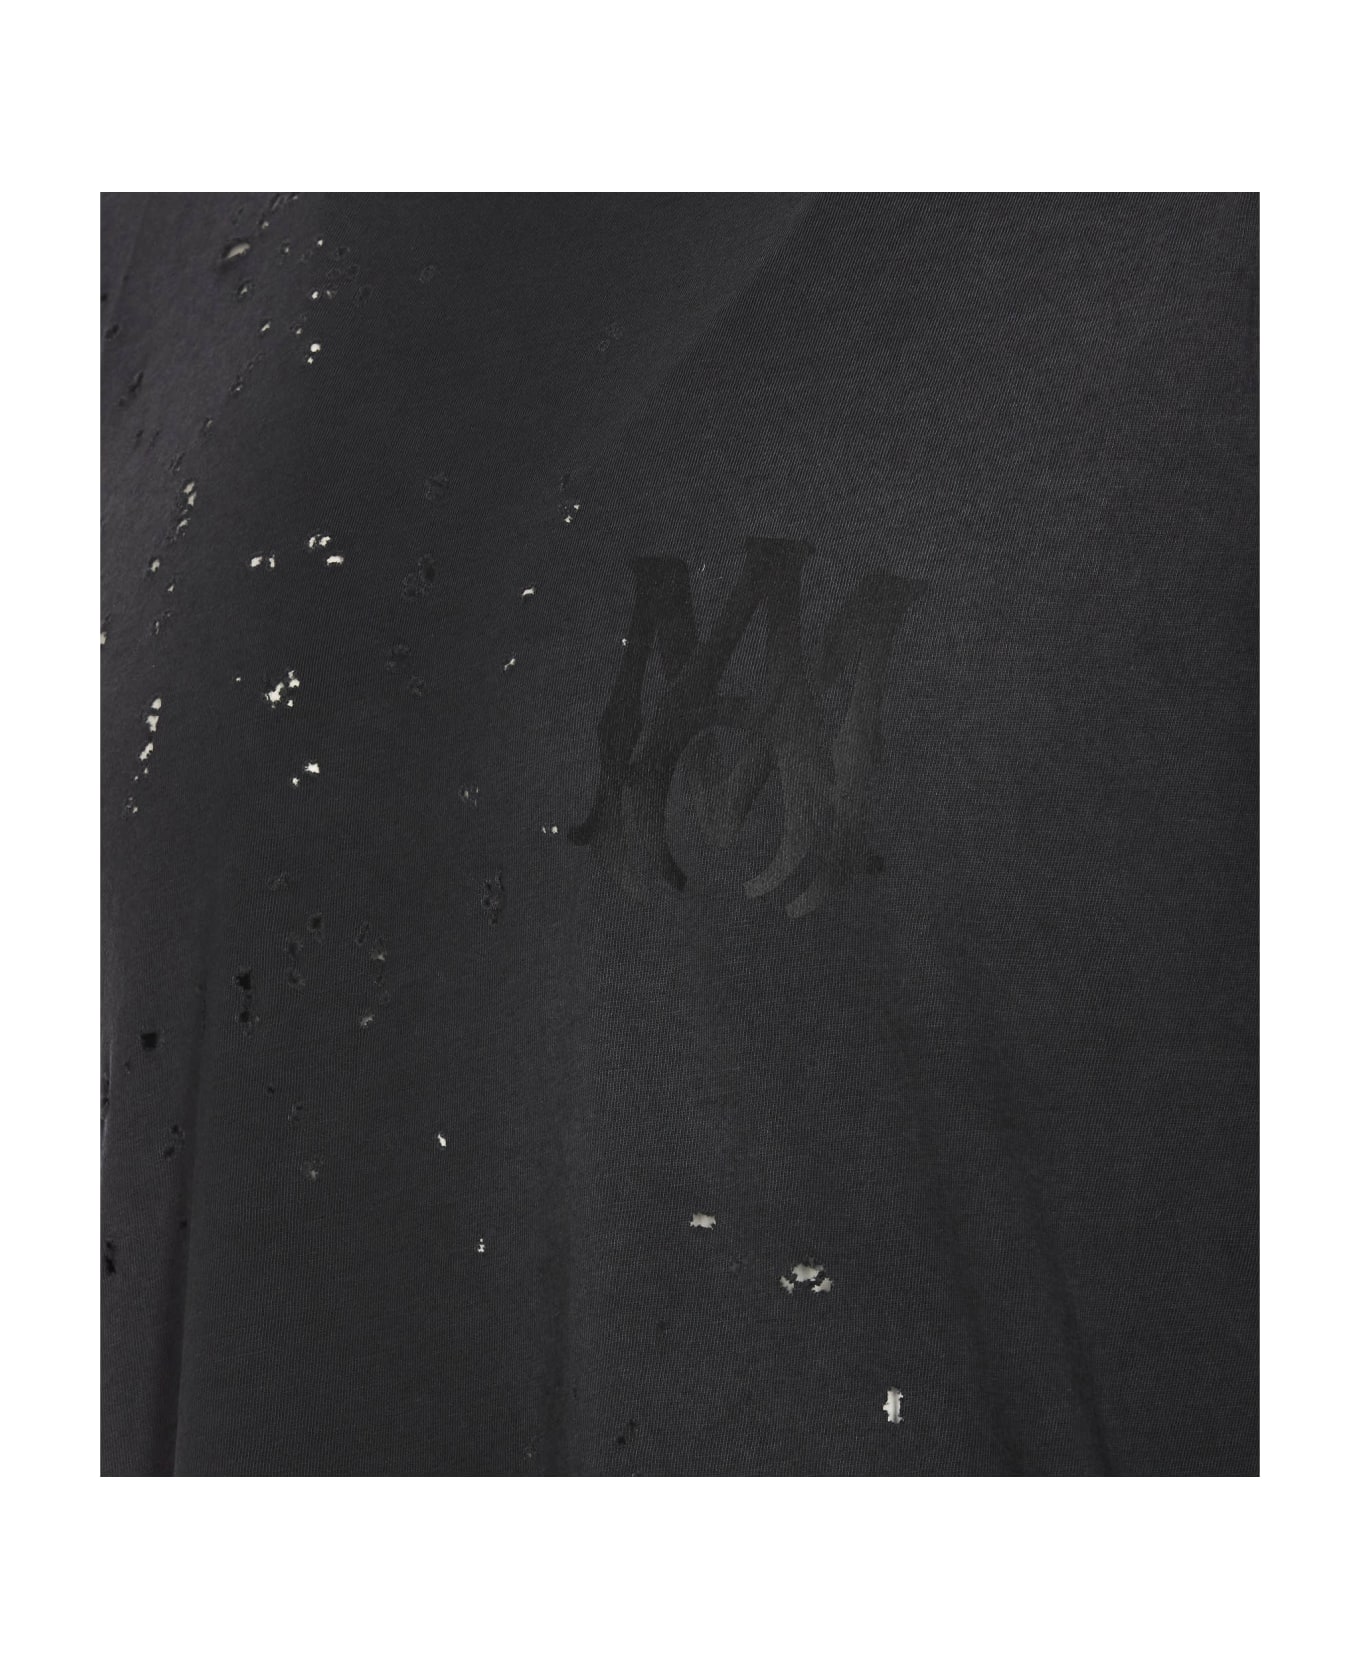 AMIRI Ma Logo Shotgun T-shirt - Black